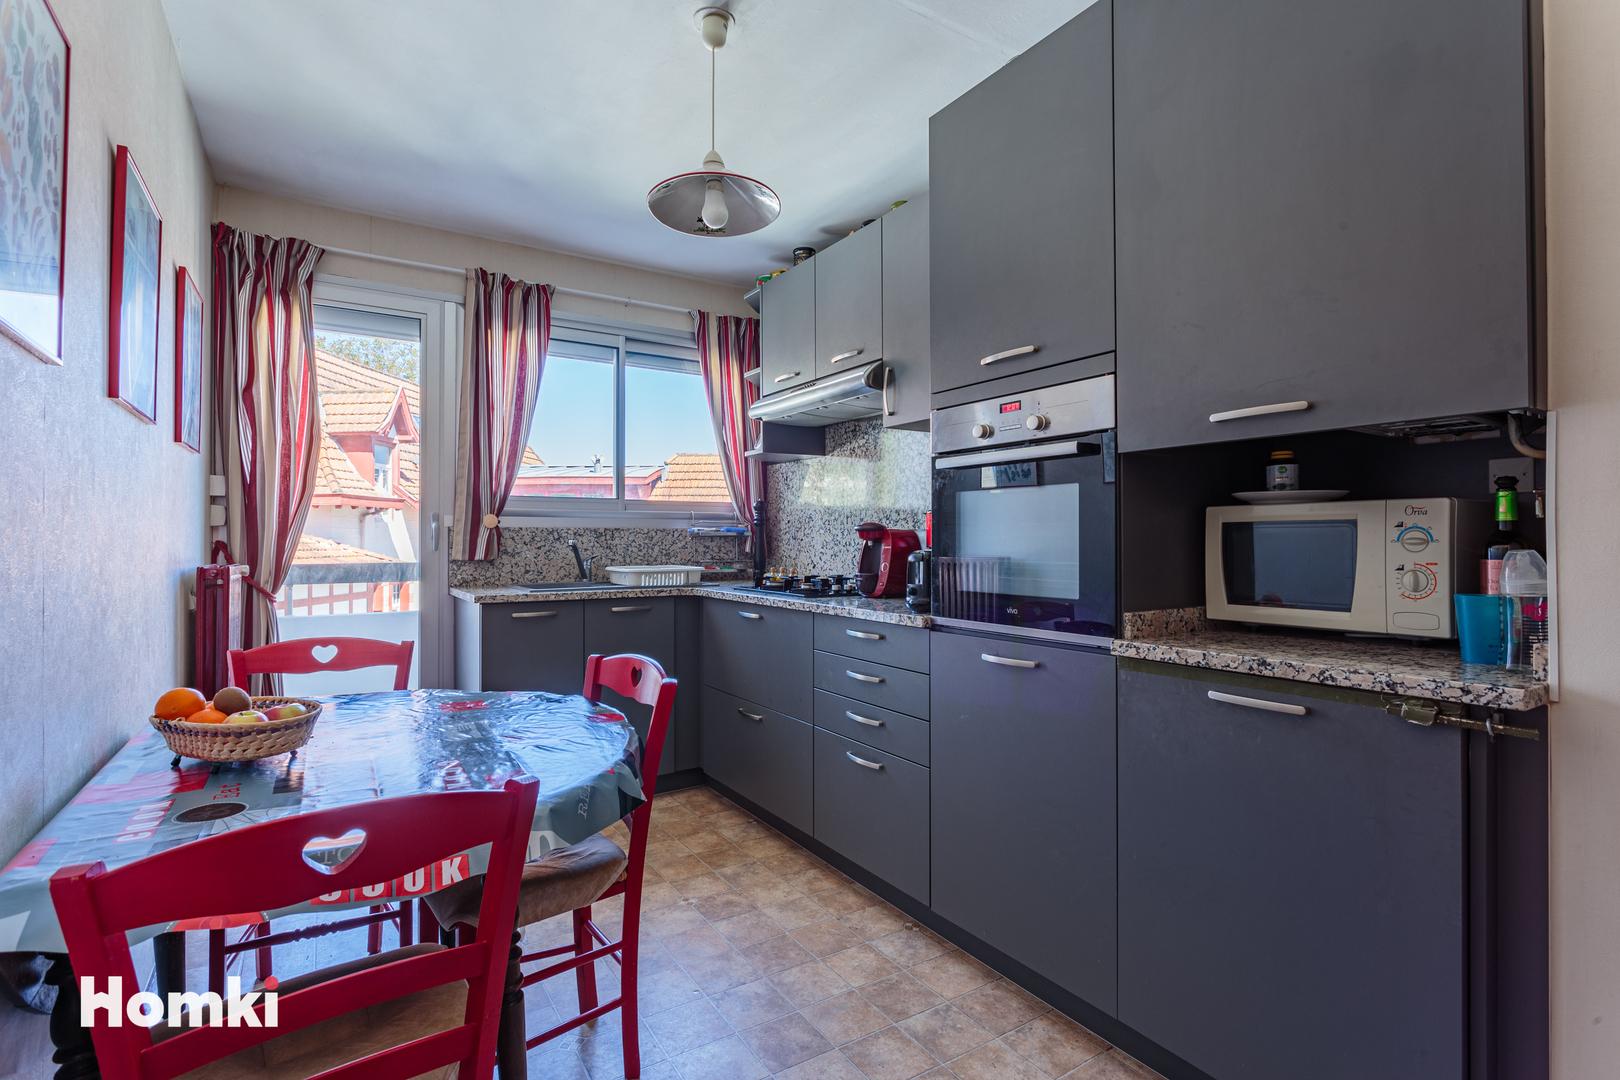 Homki - Vente Appartement  de 84.0 m² à Biarritz 64200